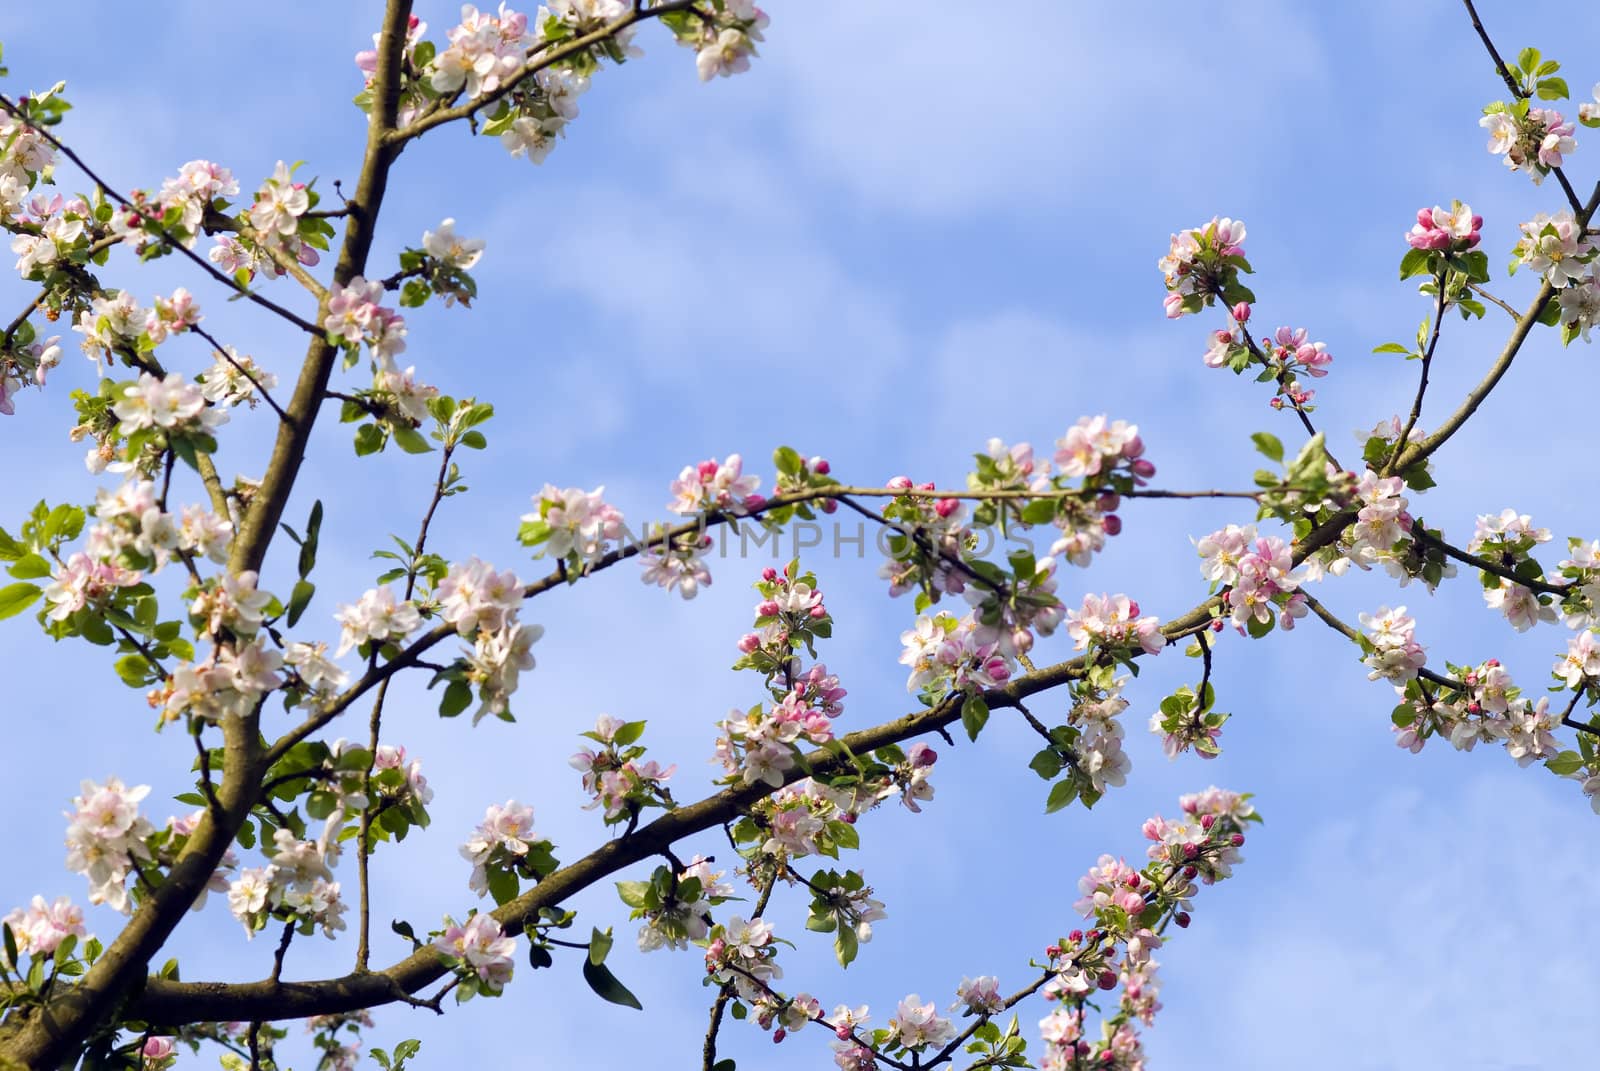 a flowering tree,symbol of springtime